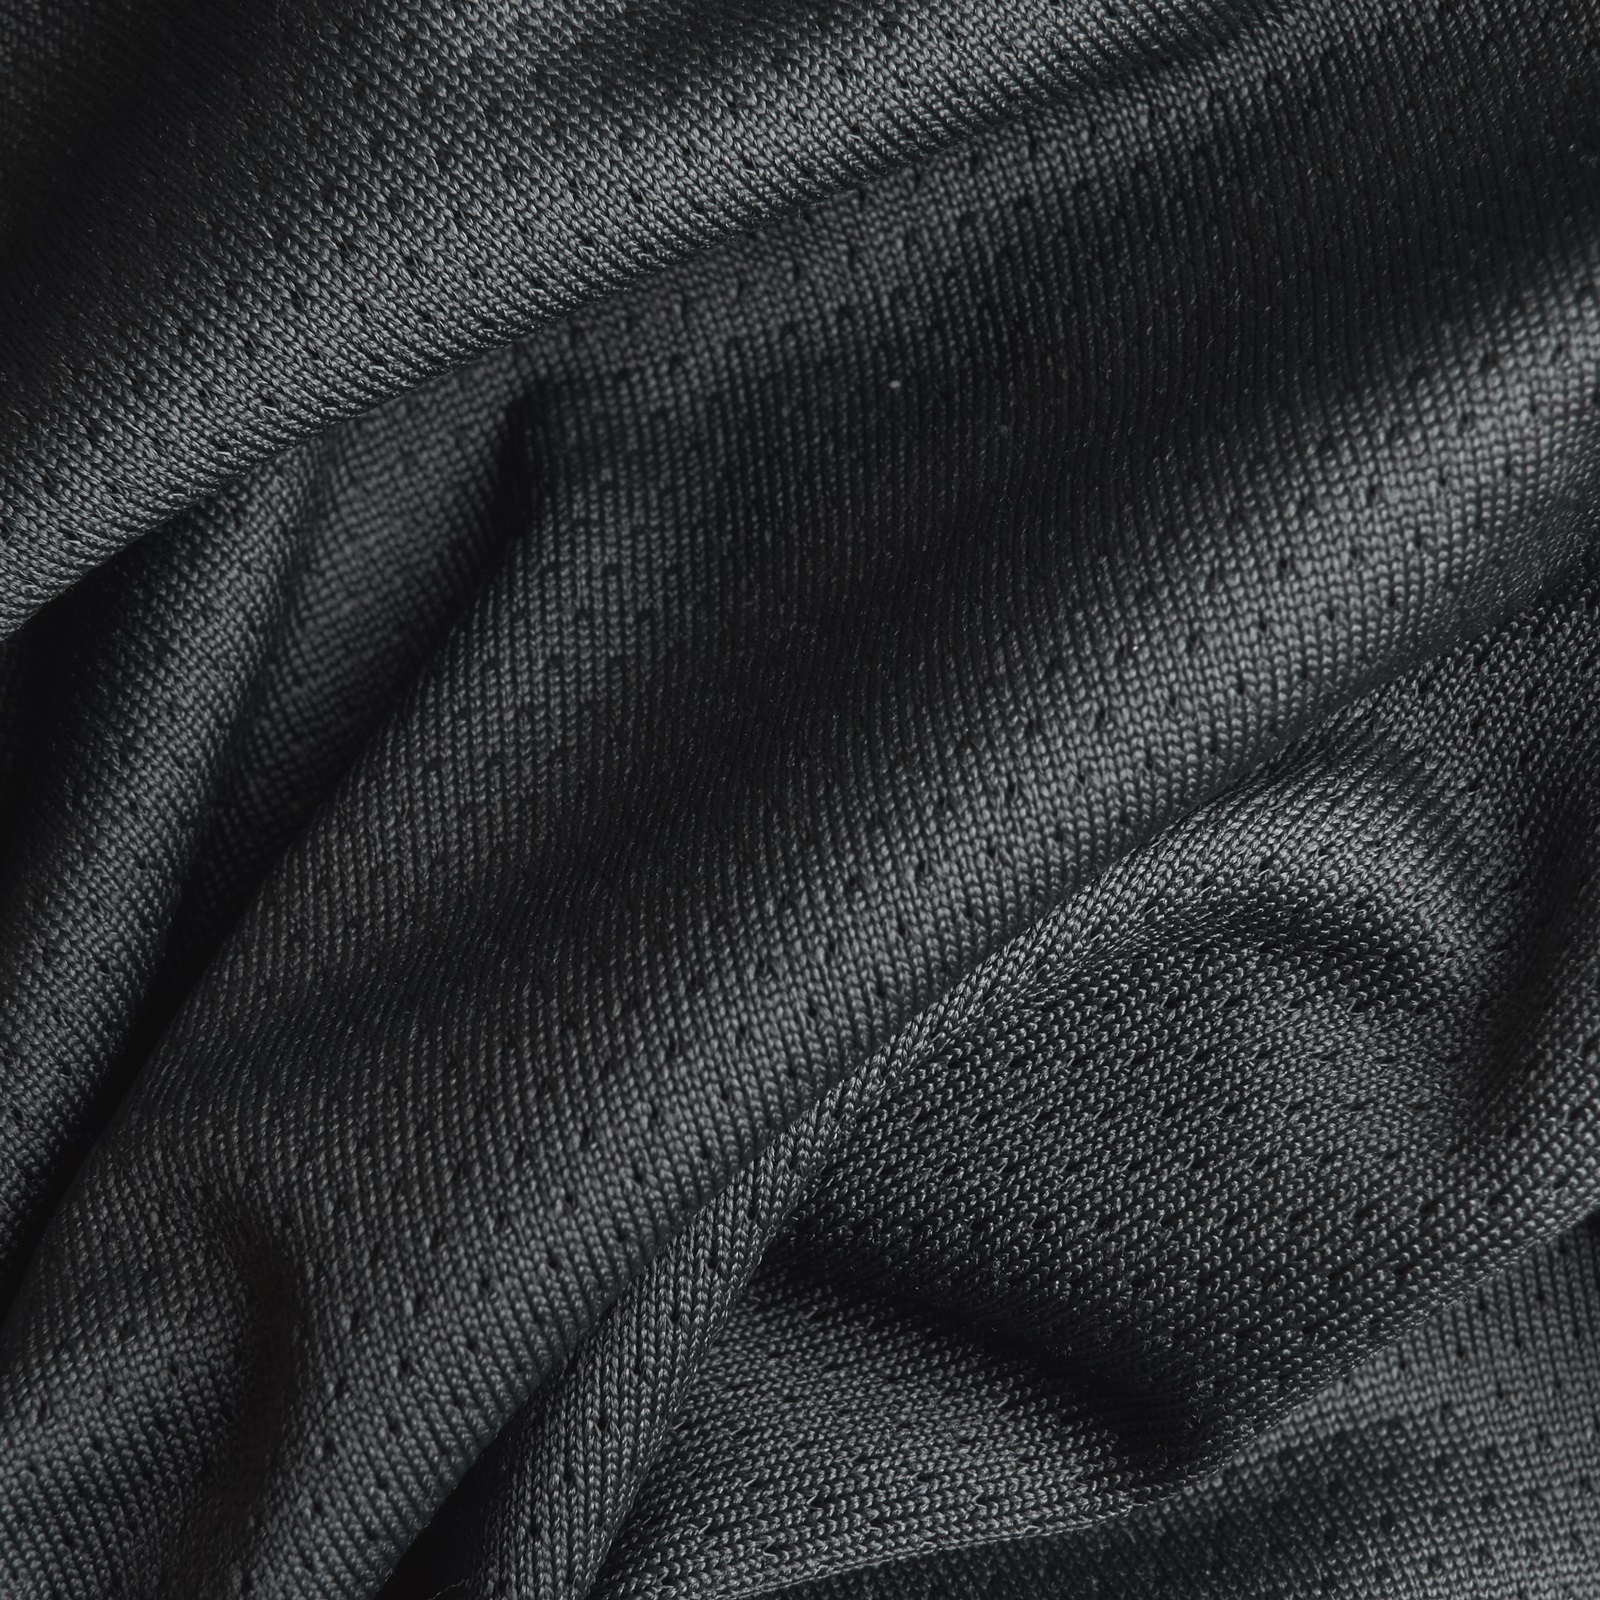 Mandy - Technical Coolmax® fabric